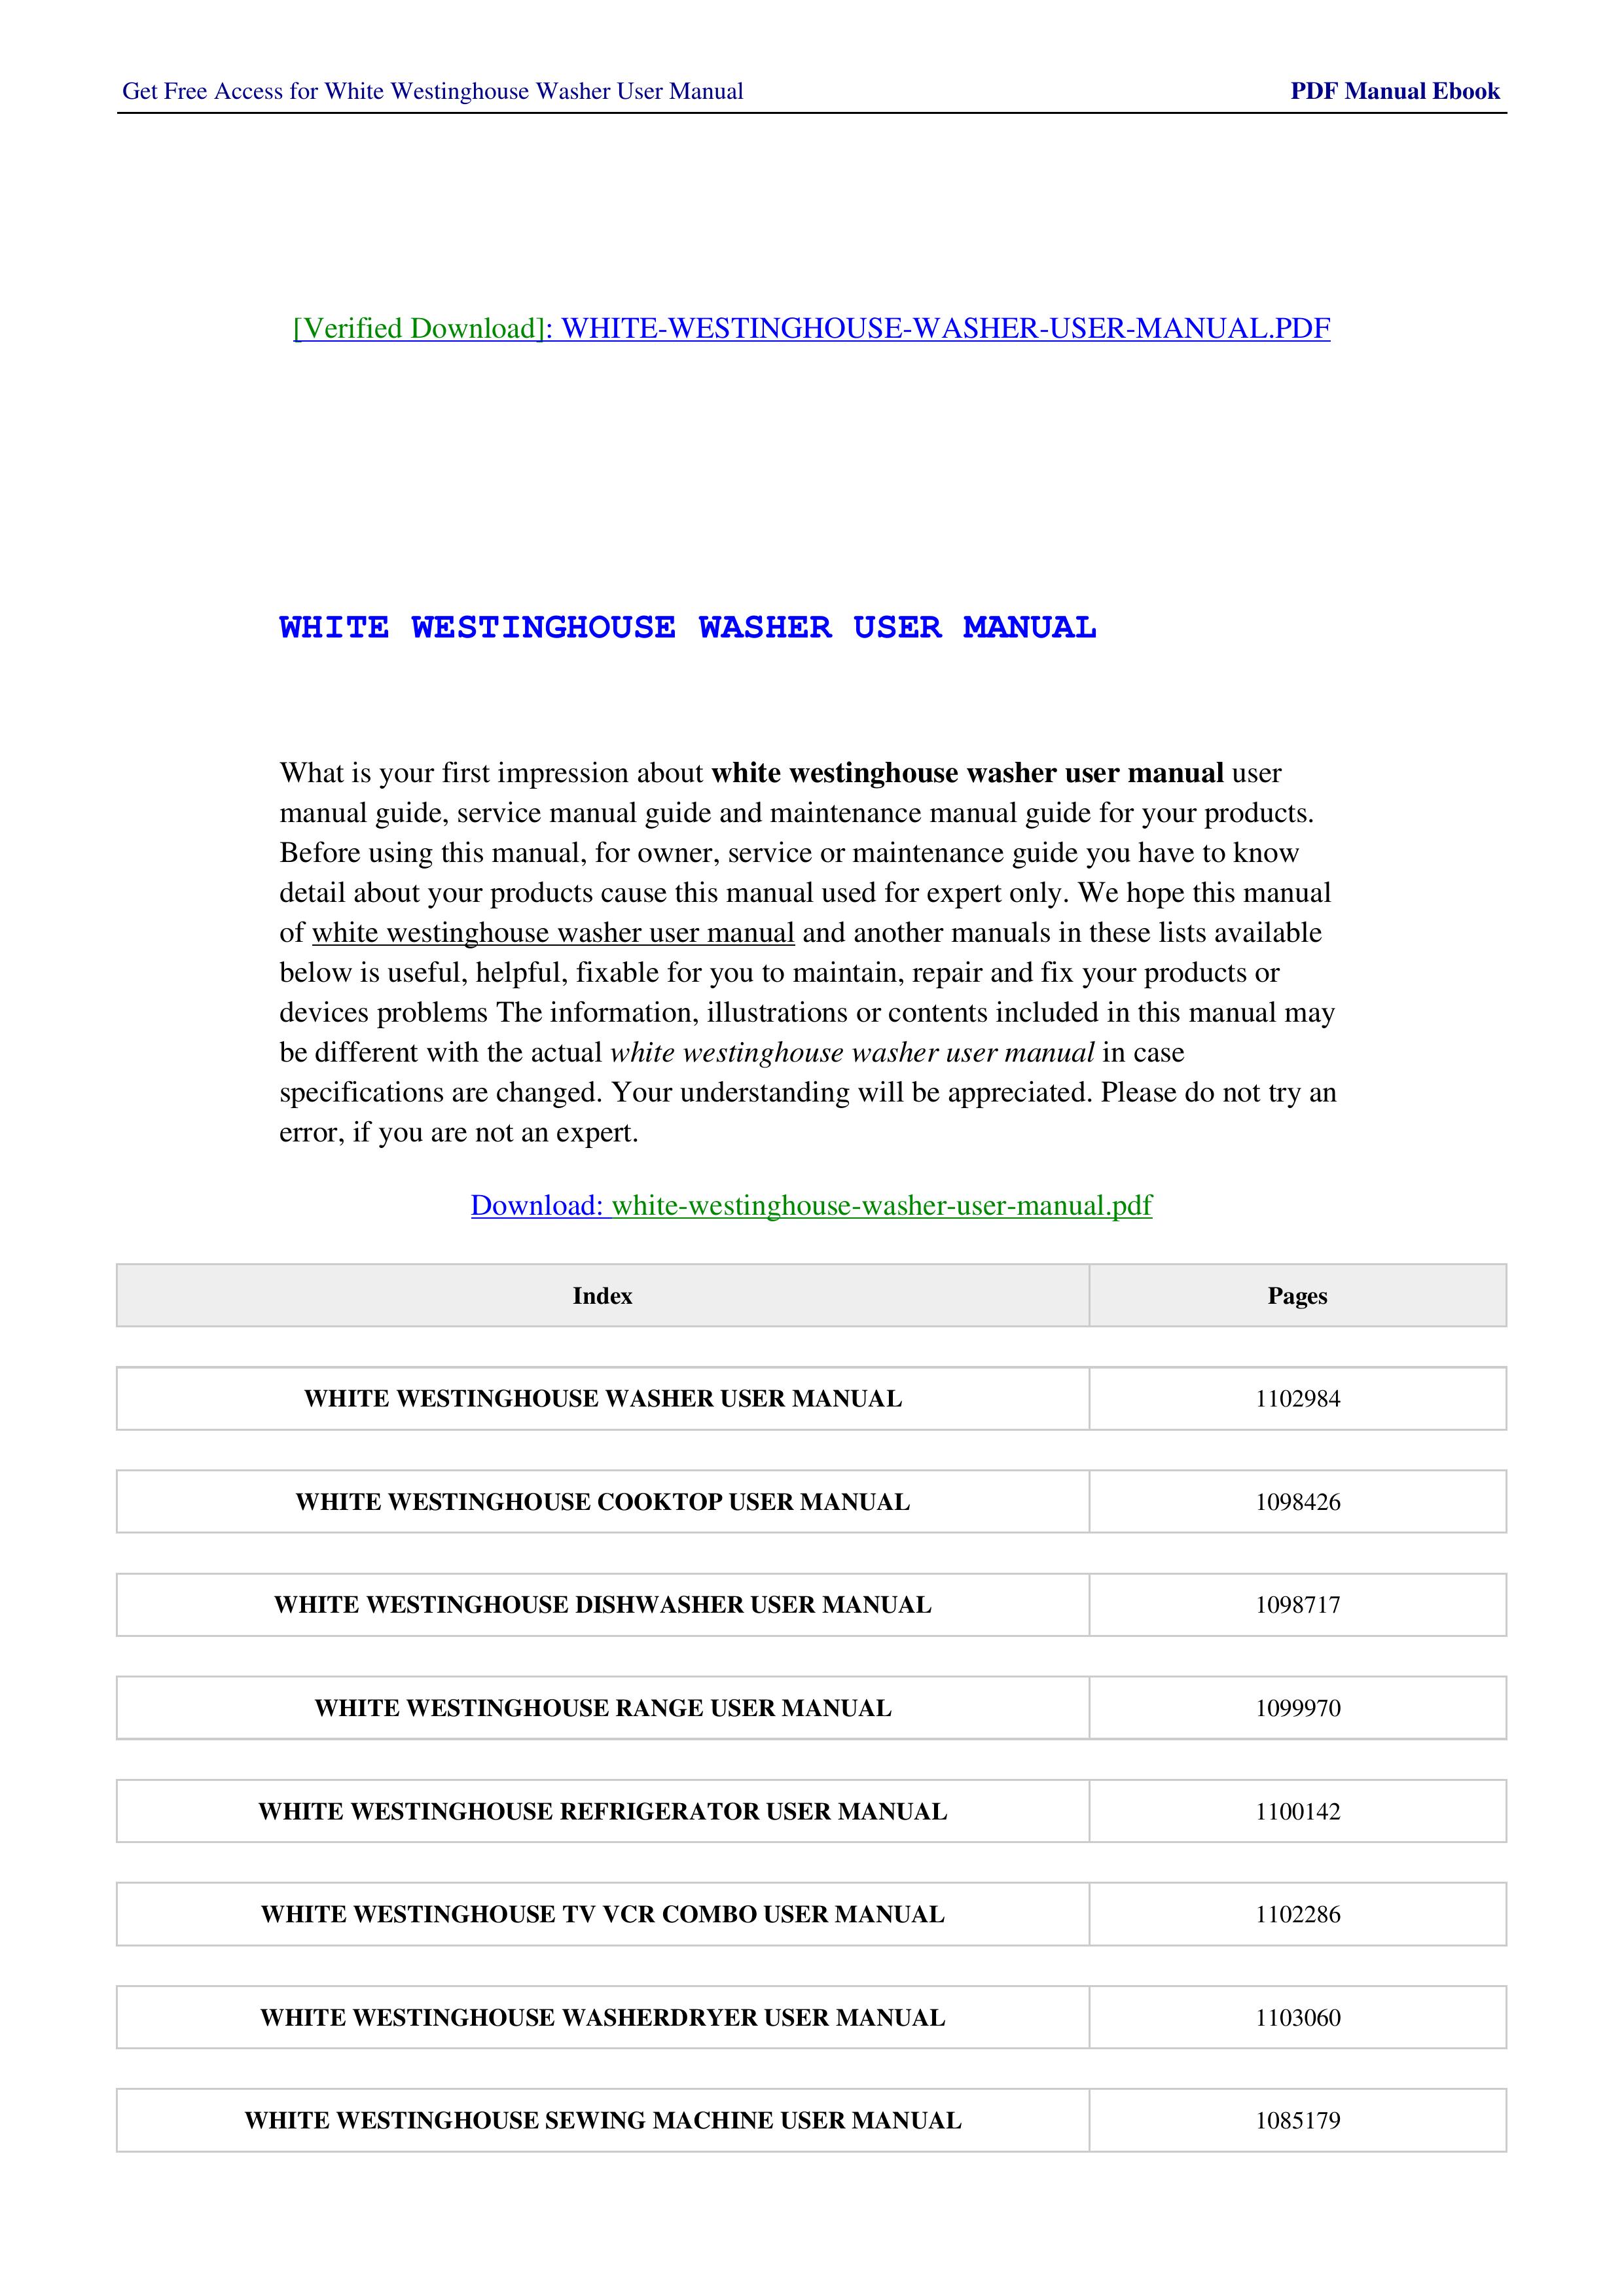 White-Westinghouse 1102984 Washer User Manual